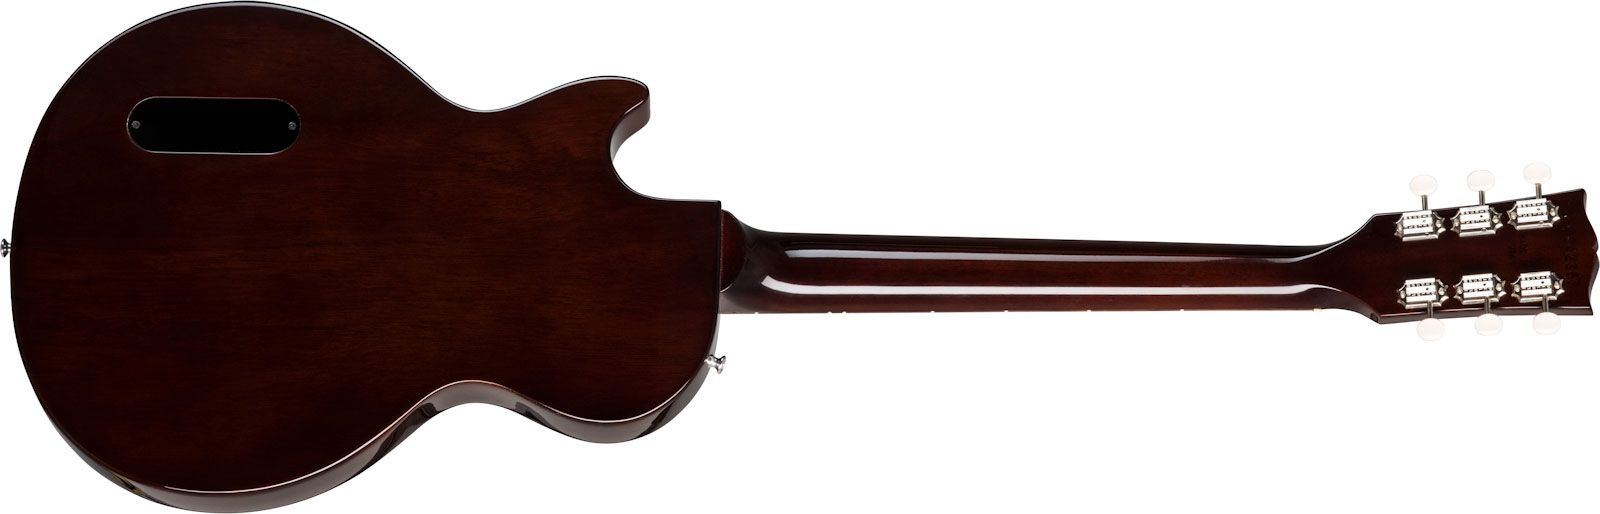 Gibson Les Paul Junior Original P90 Ht Rw - Vintage Tobacco Burst - Single cut electric guitar - Variation 1